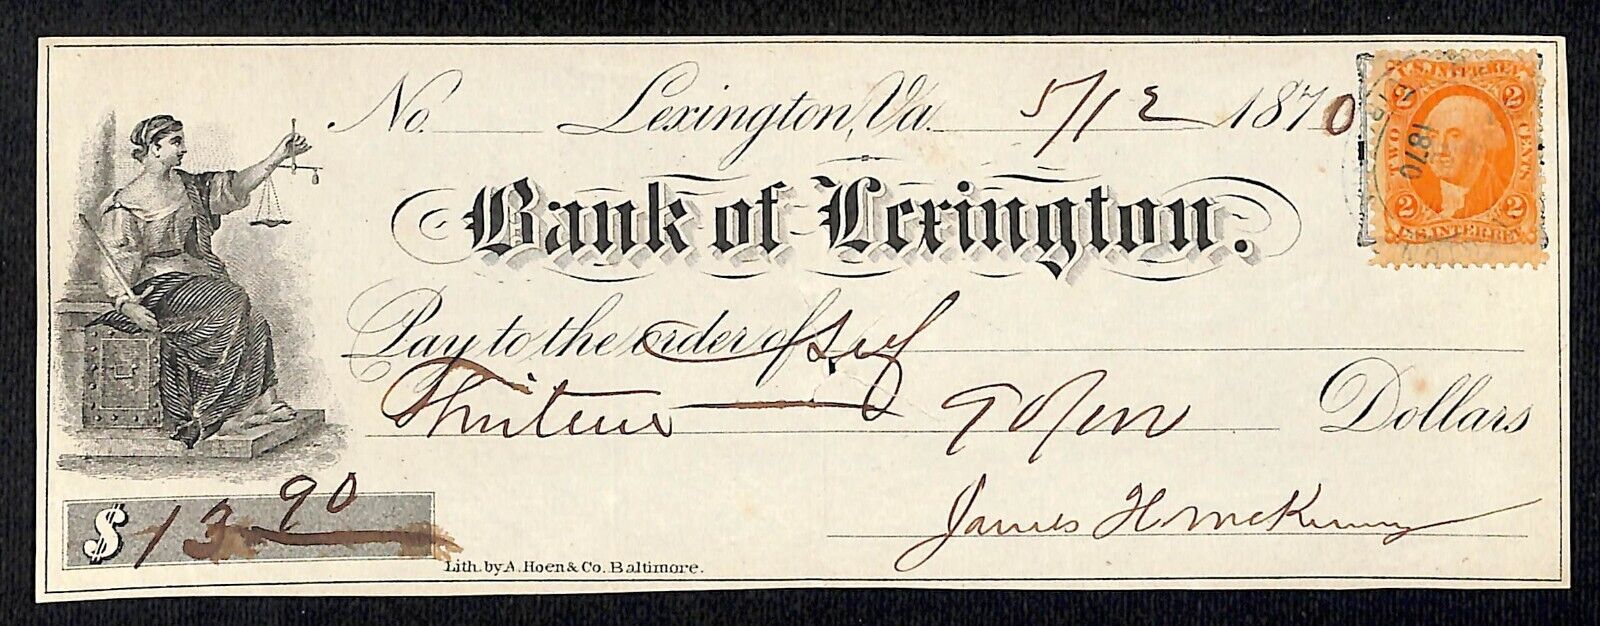 Bank of Lexington VA 1870 $13.90 Bank Check w/ Tax Stamp Vignette